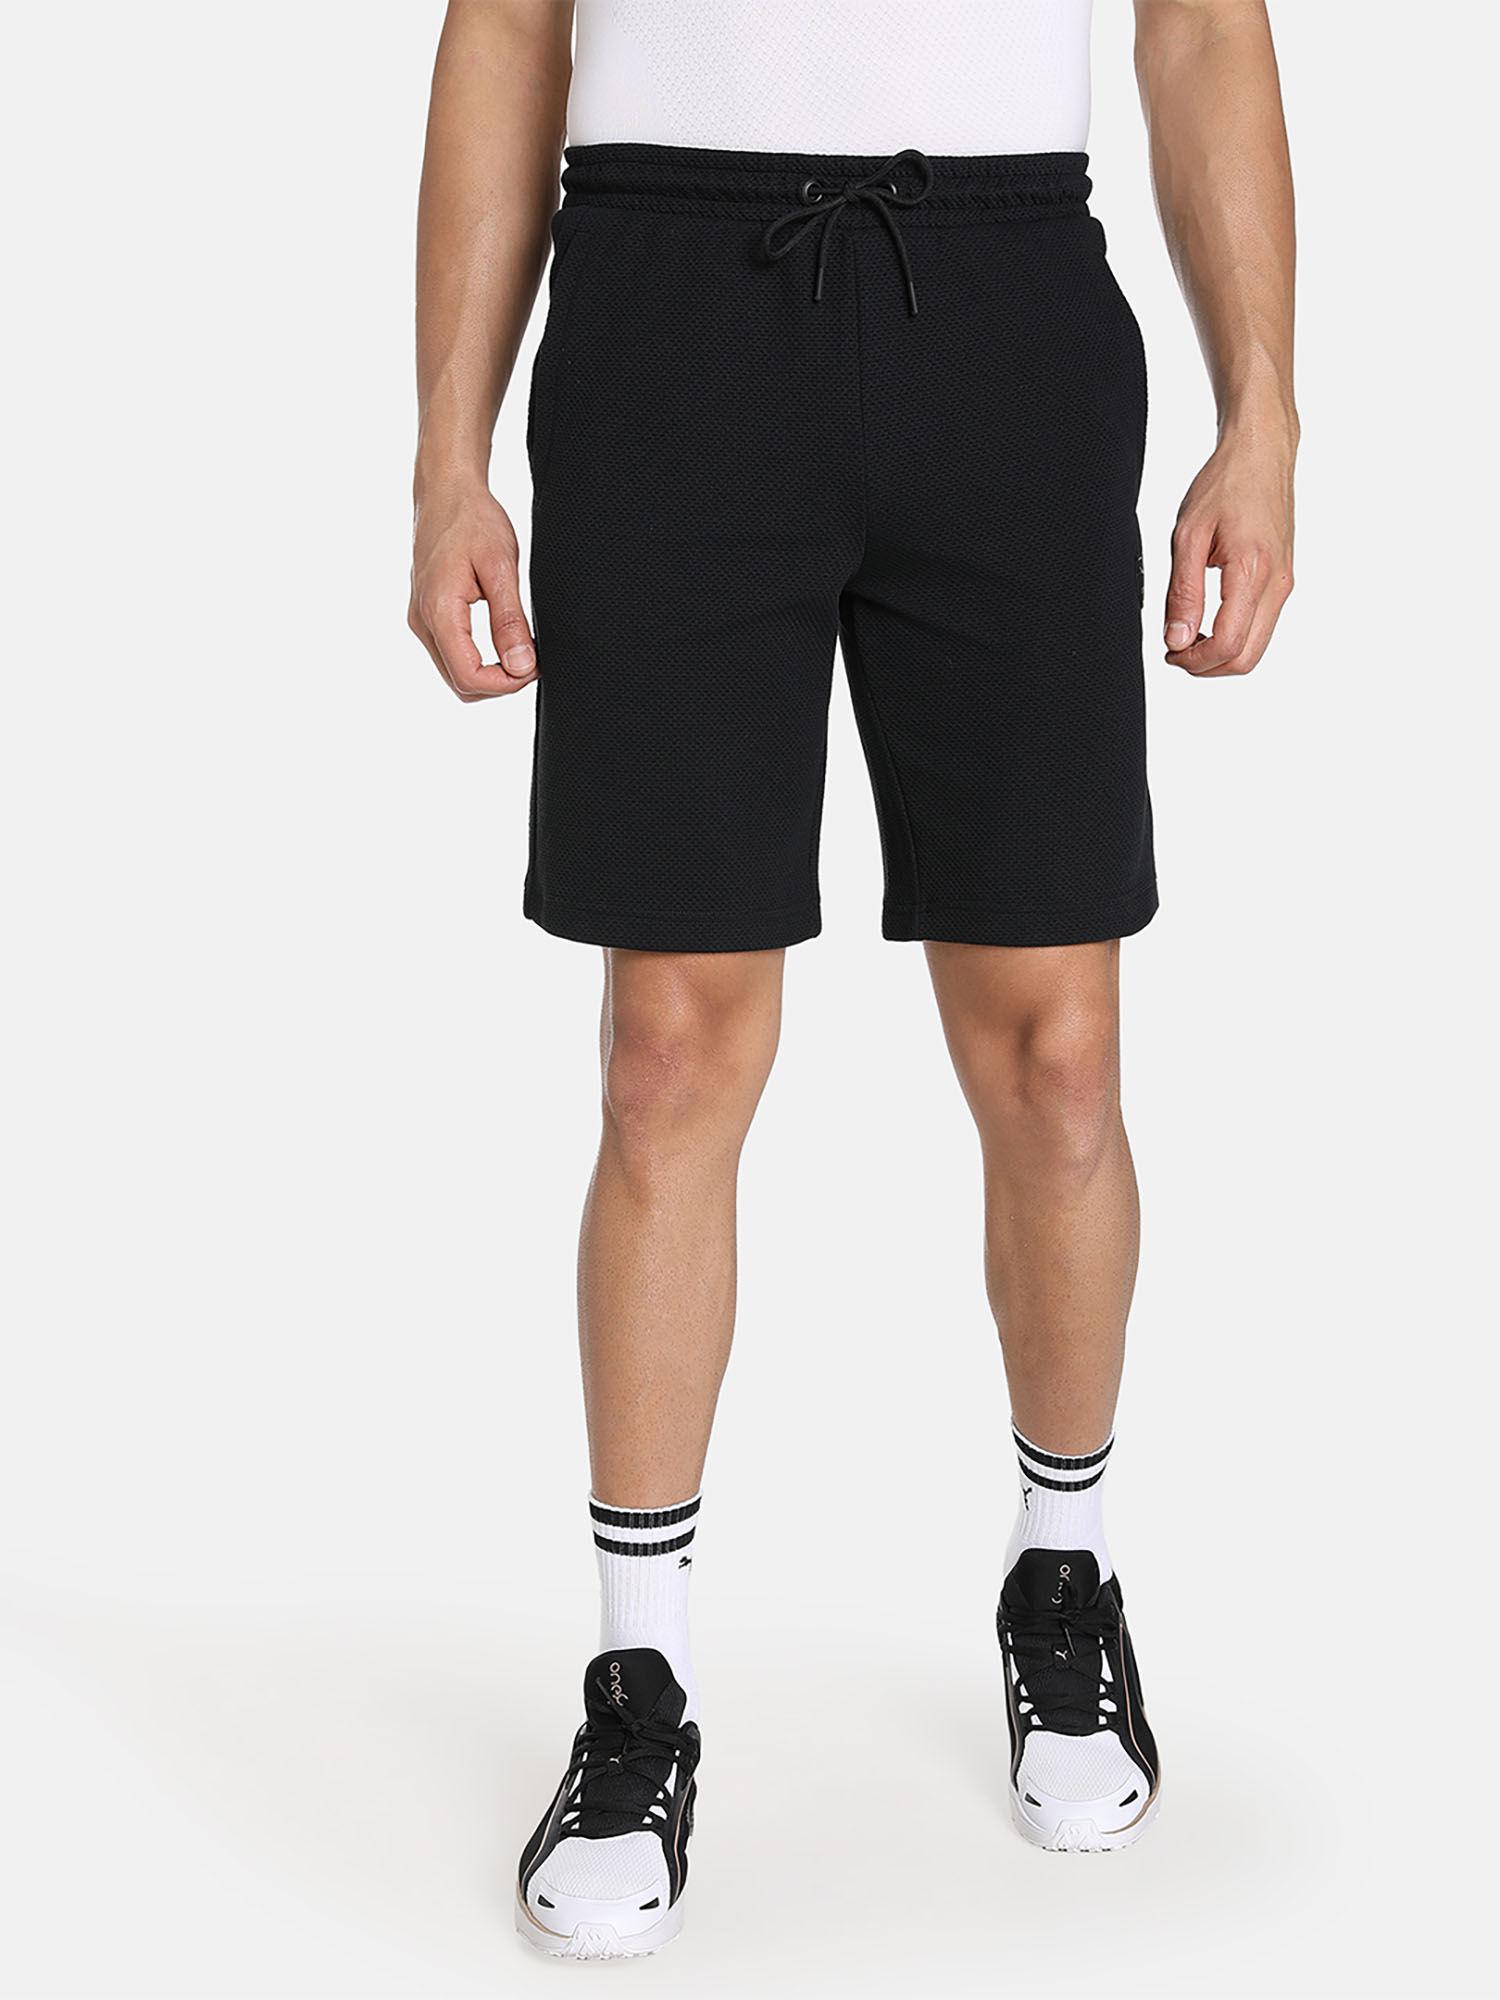 X One8 Sweat Men's Black Shorts